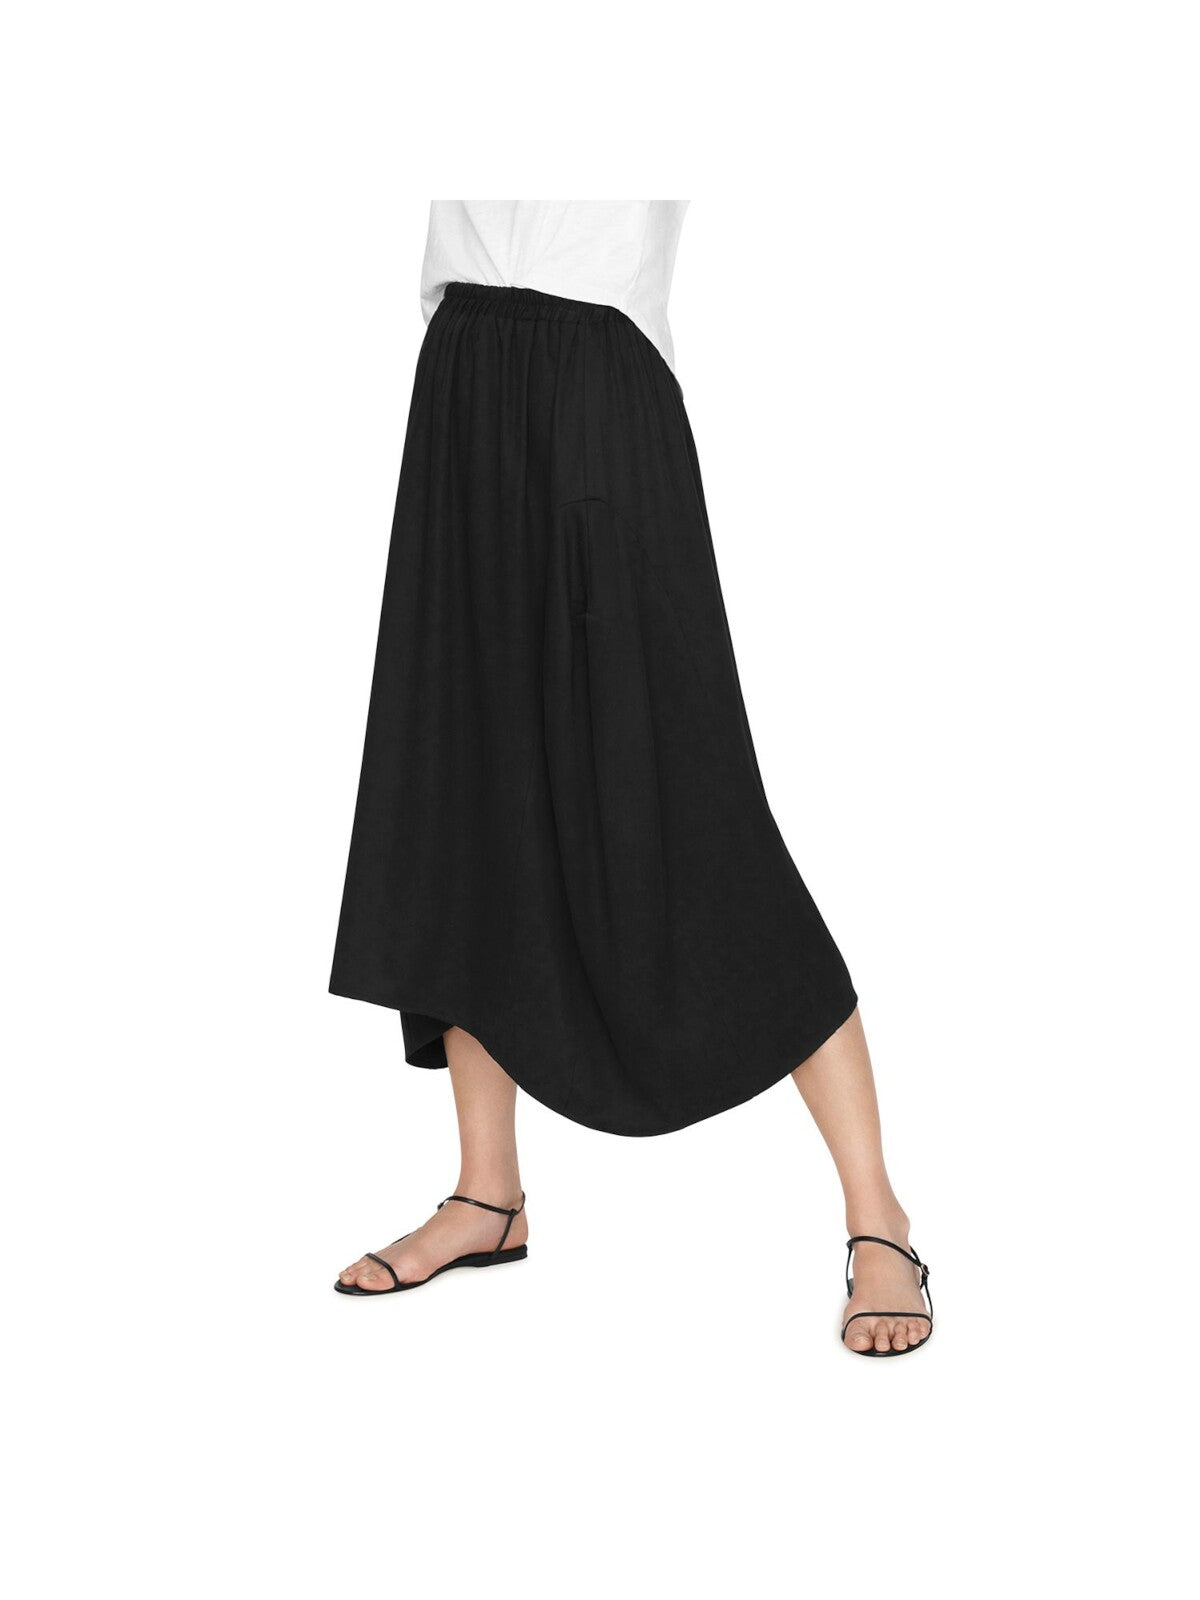 B NEW YORK Womens Black Pocketed Elastic Waist Pull-on Style Midi Skirt XS